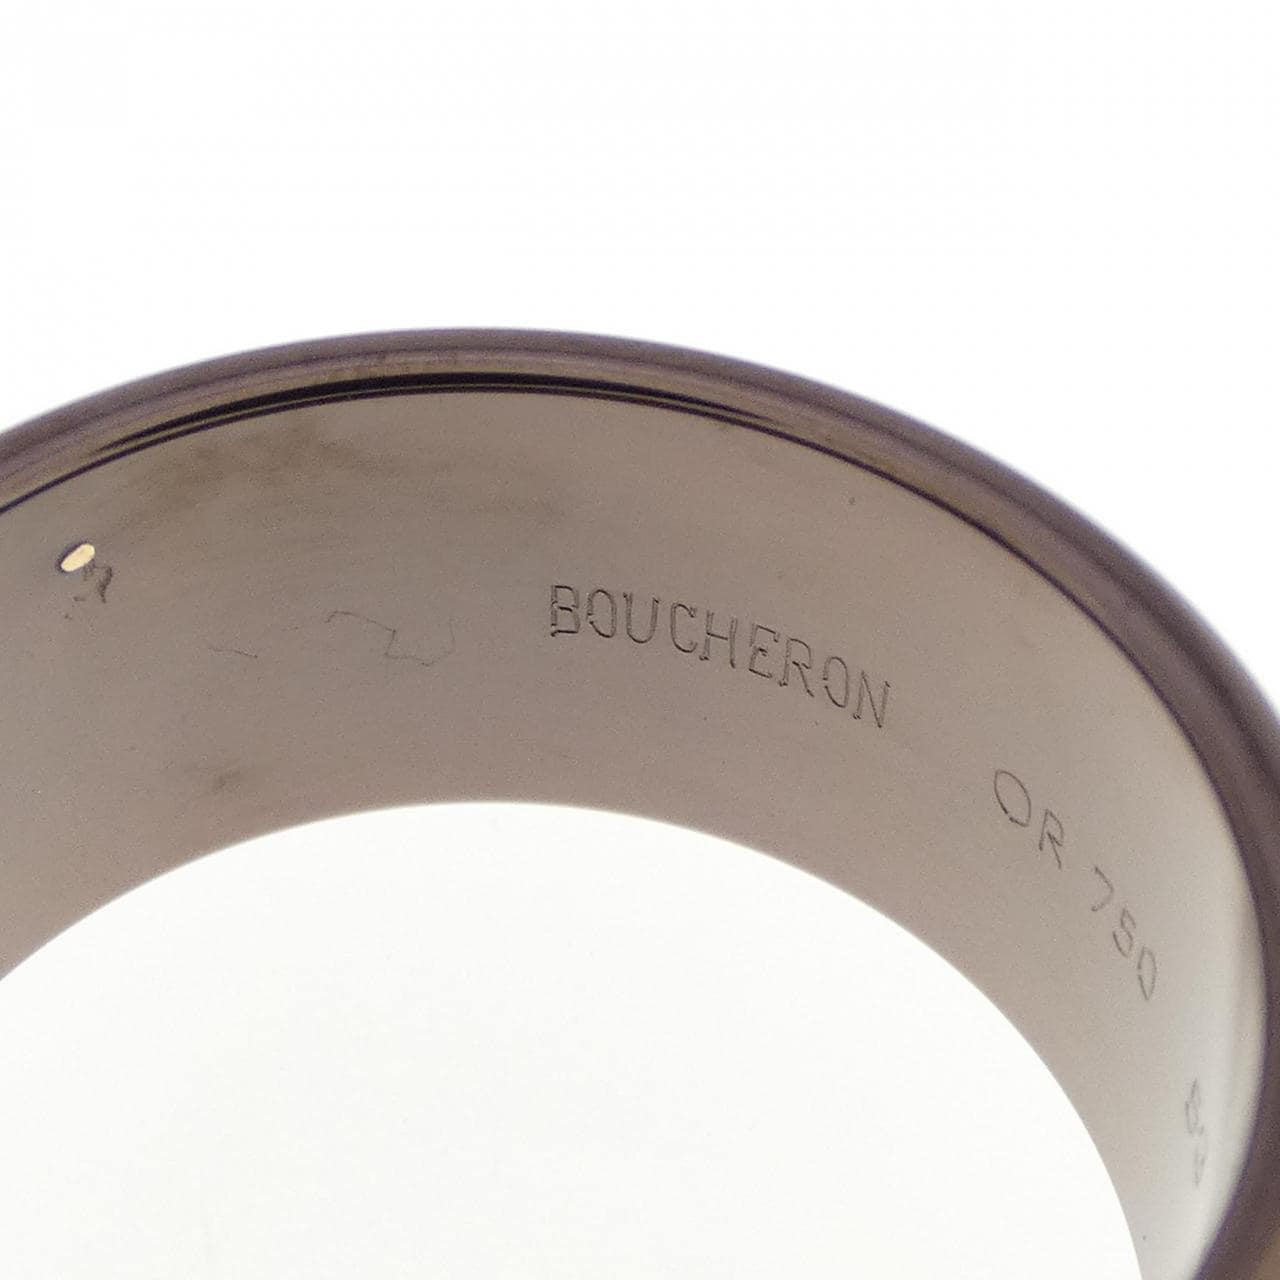 Boucheron Gaudron ring